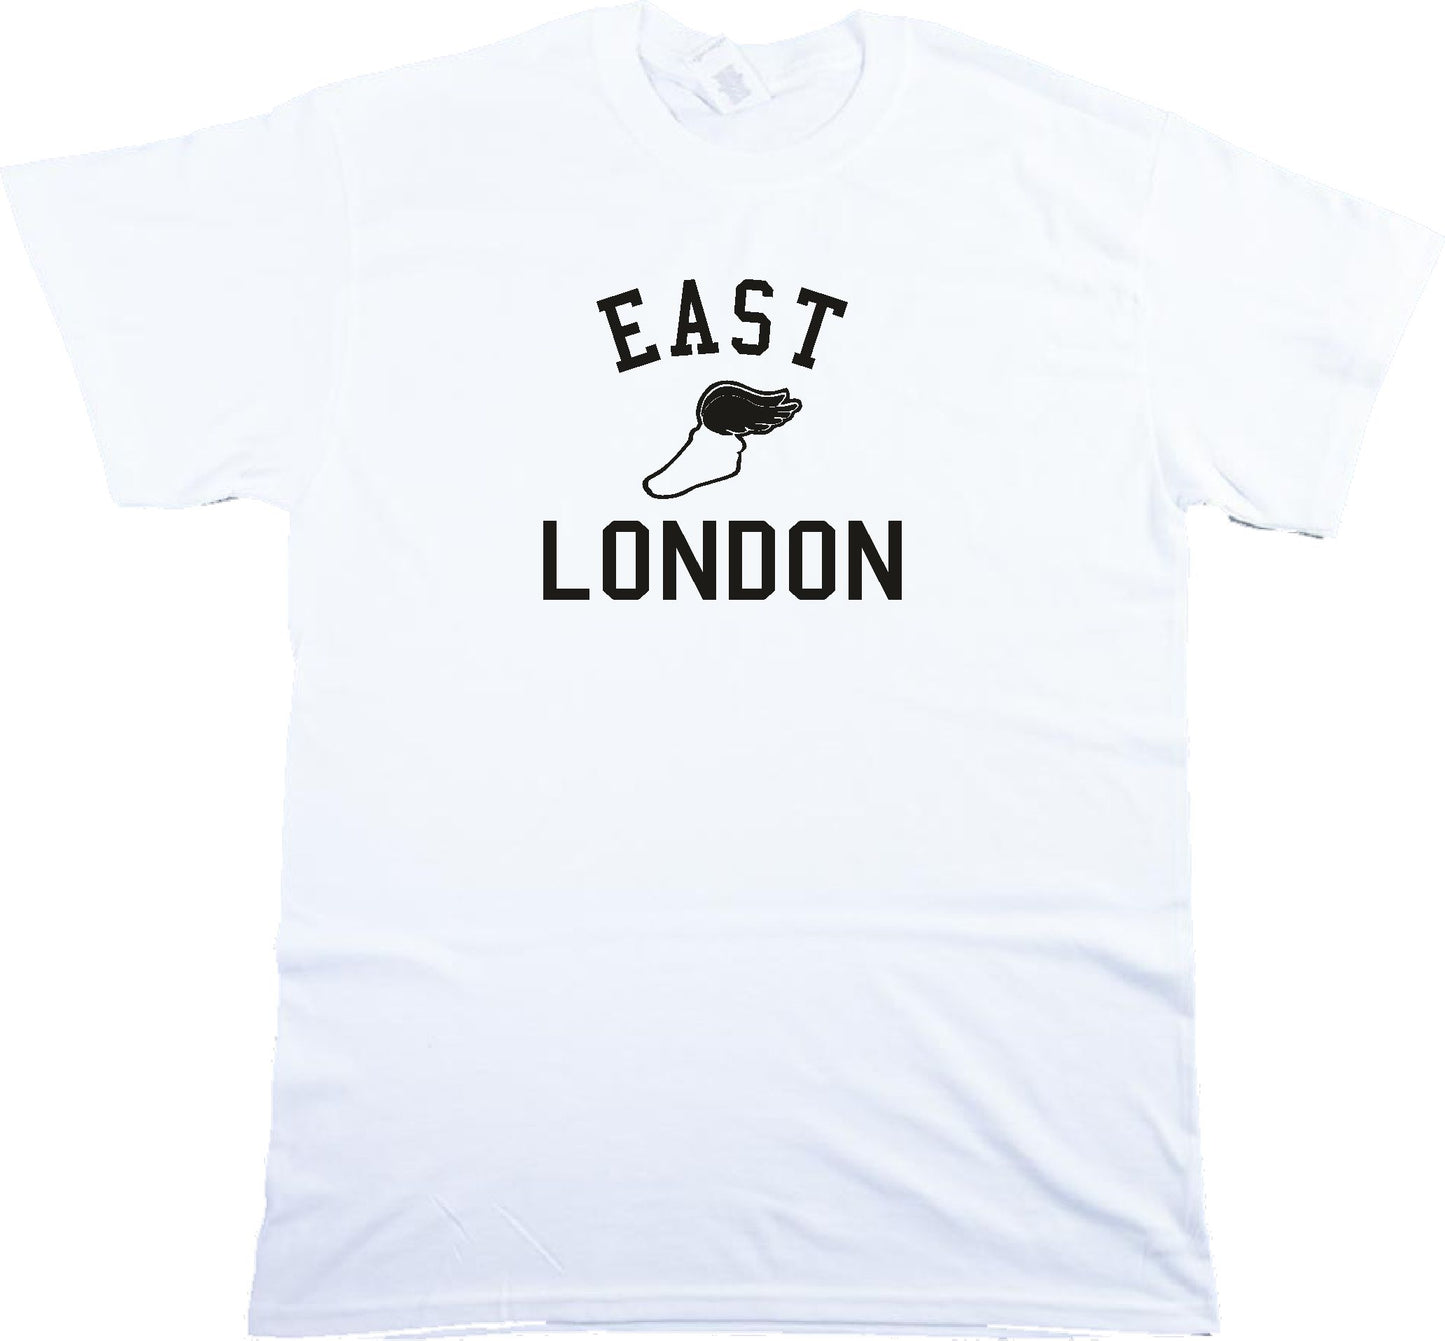 East London Retro Track T-Shirt - Running, College, Souvenir, Various Colours